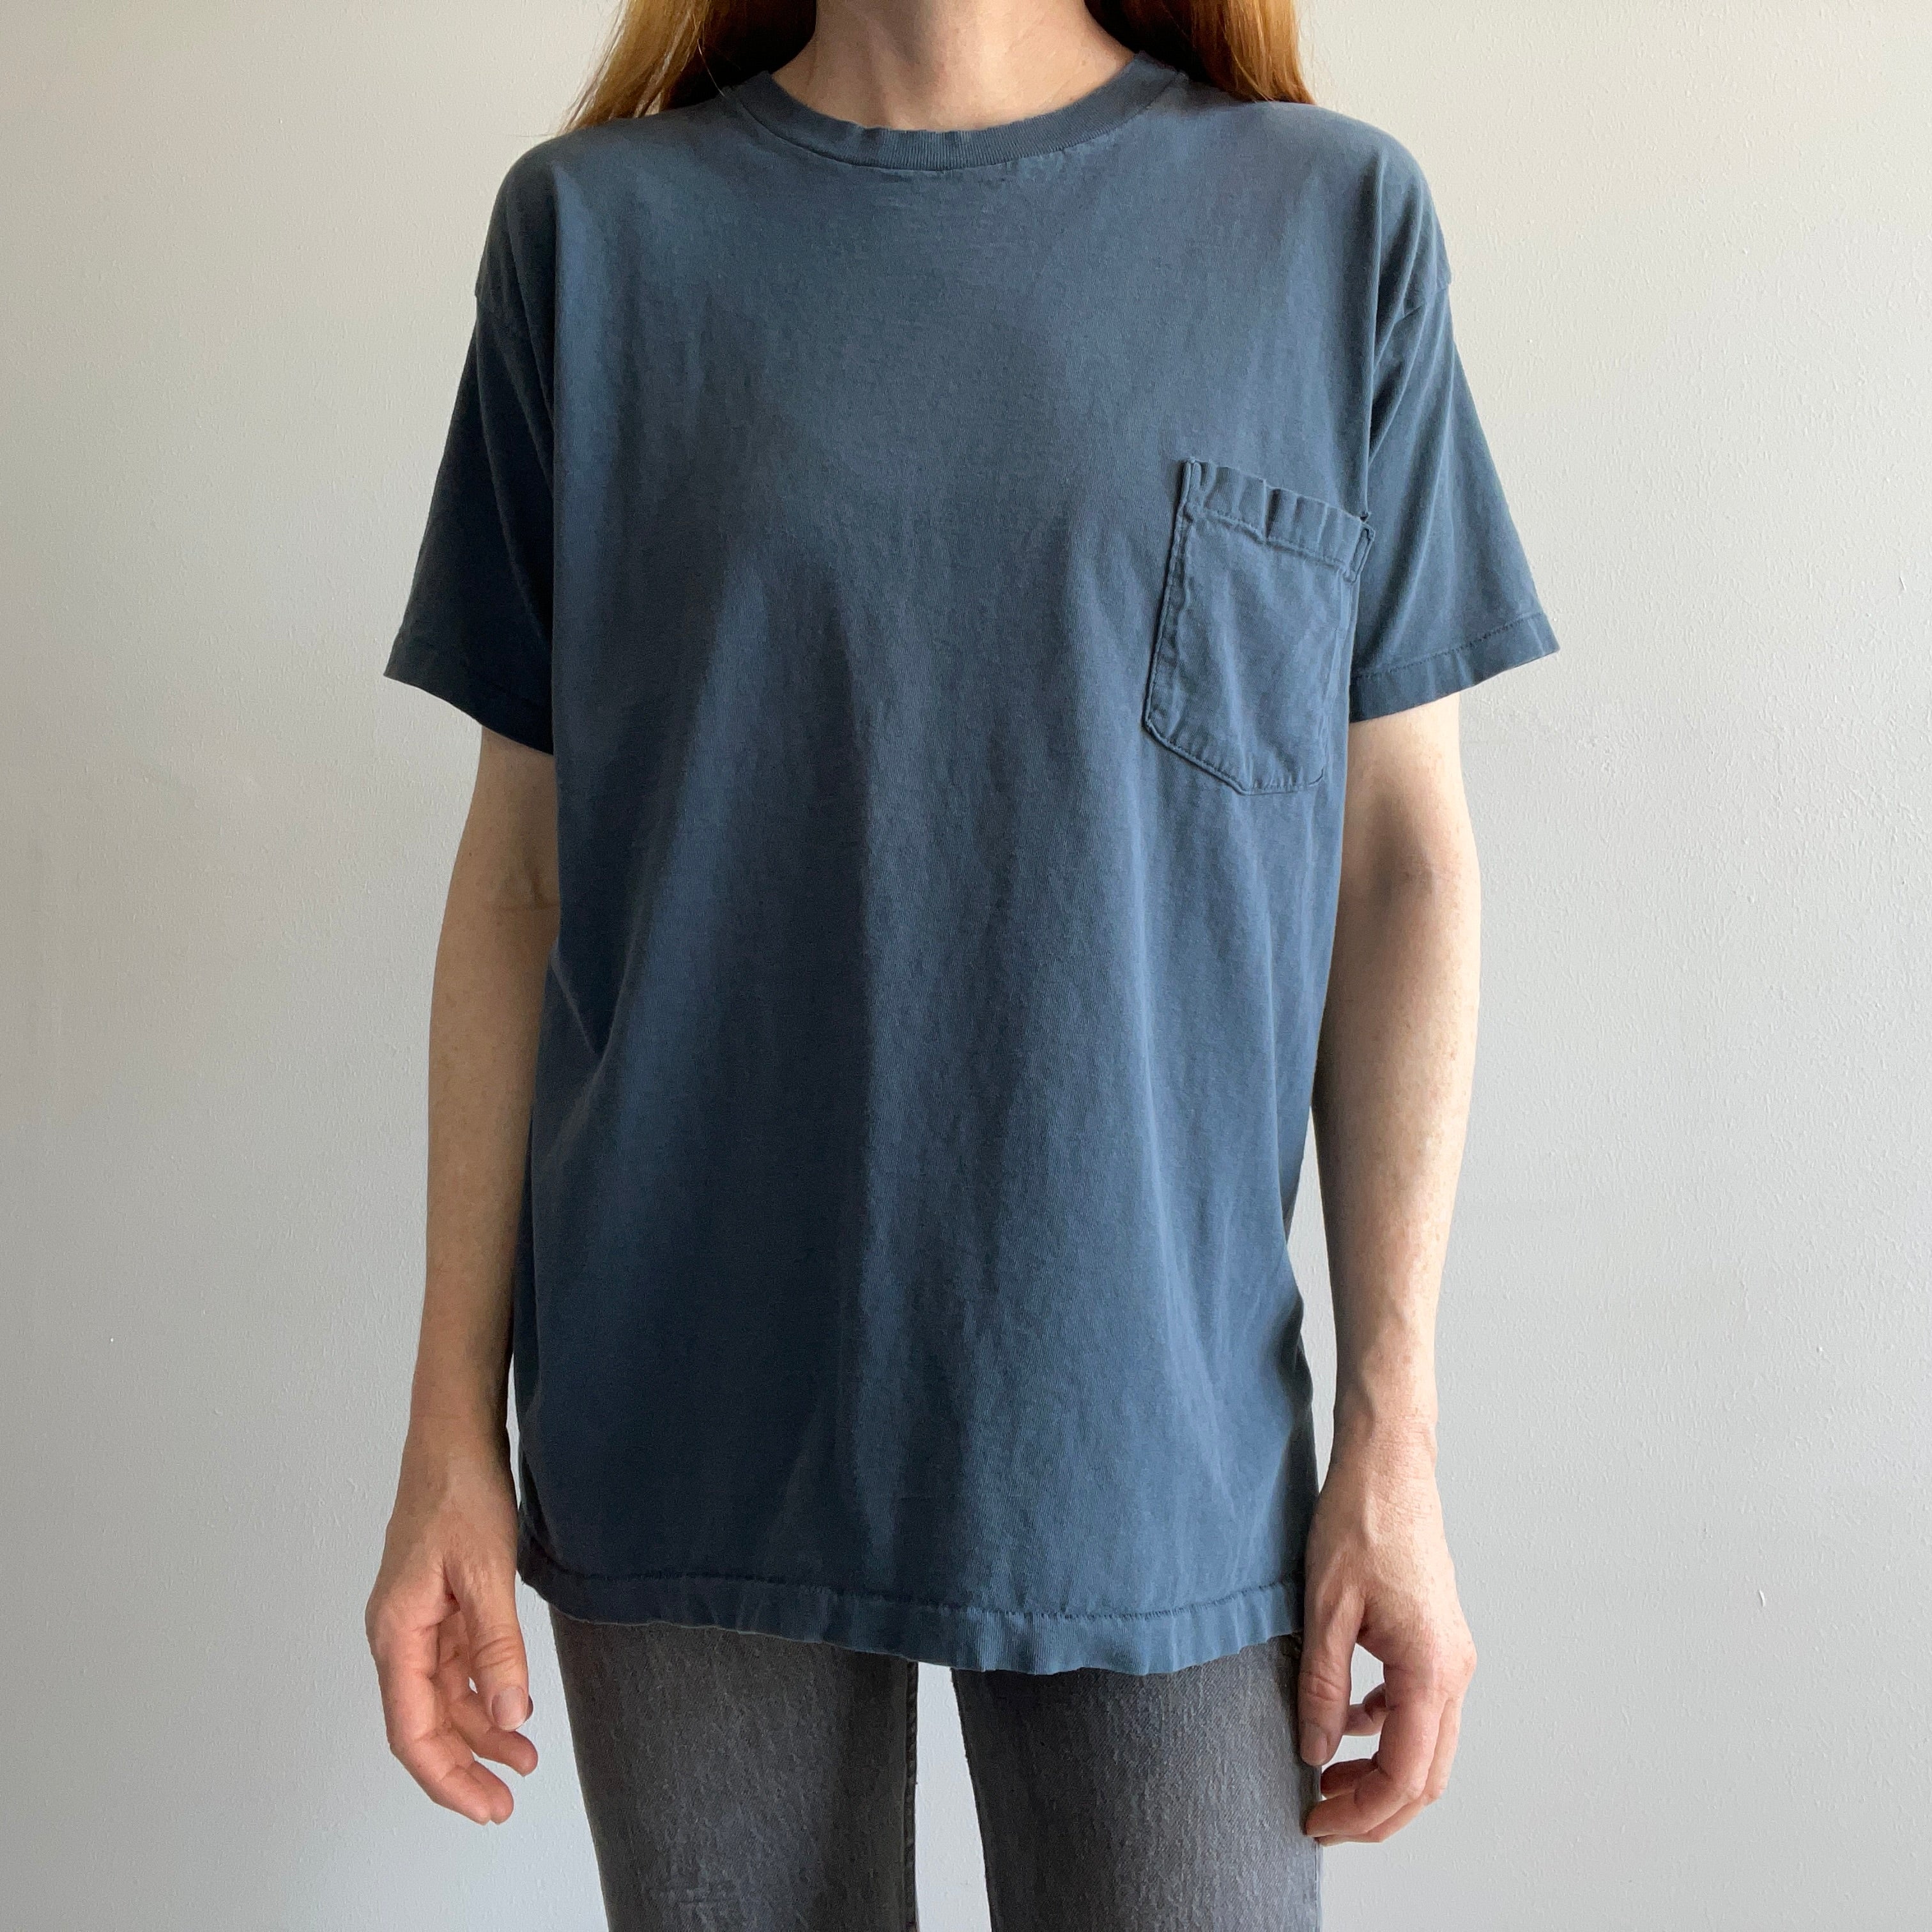 1990s USA Made Gap Pocket T-Shirt - Nicely Worn